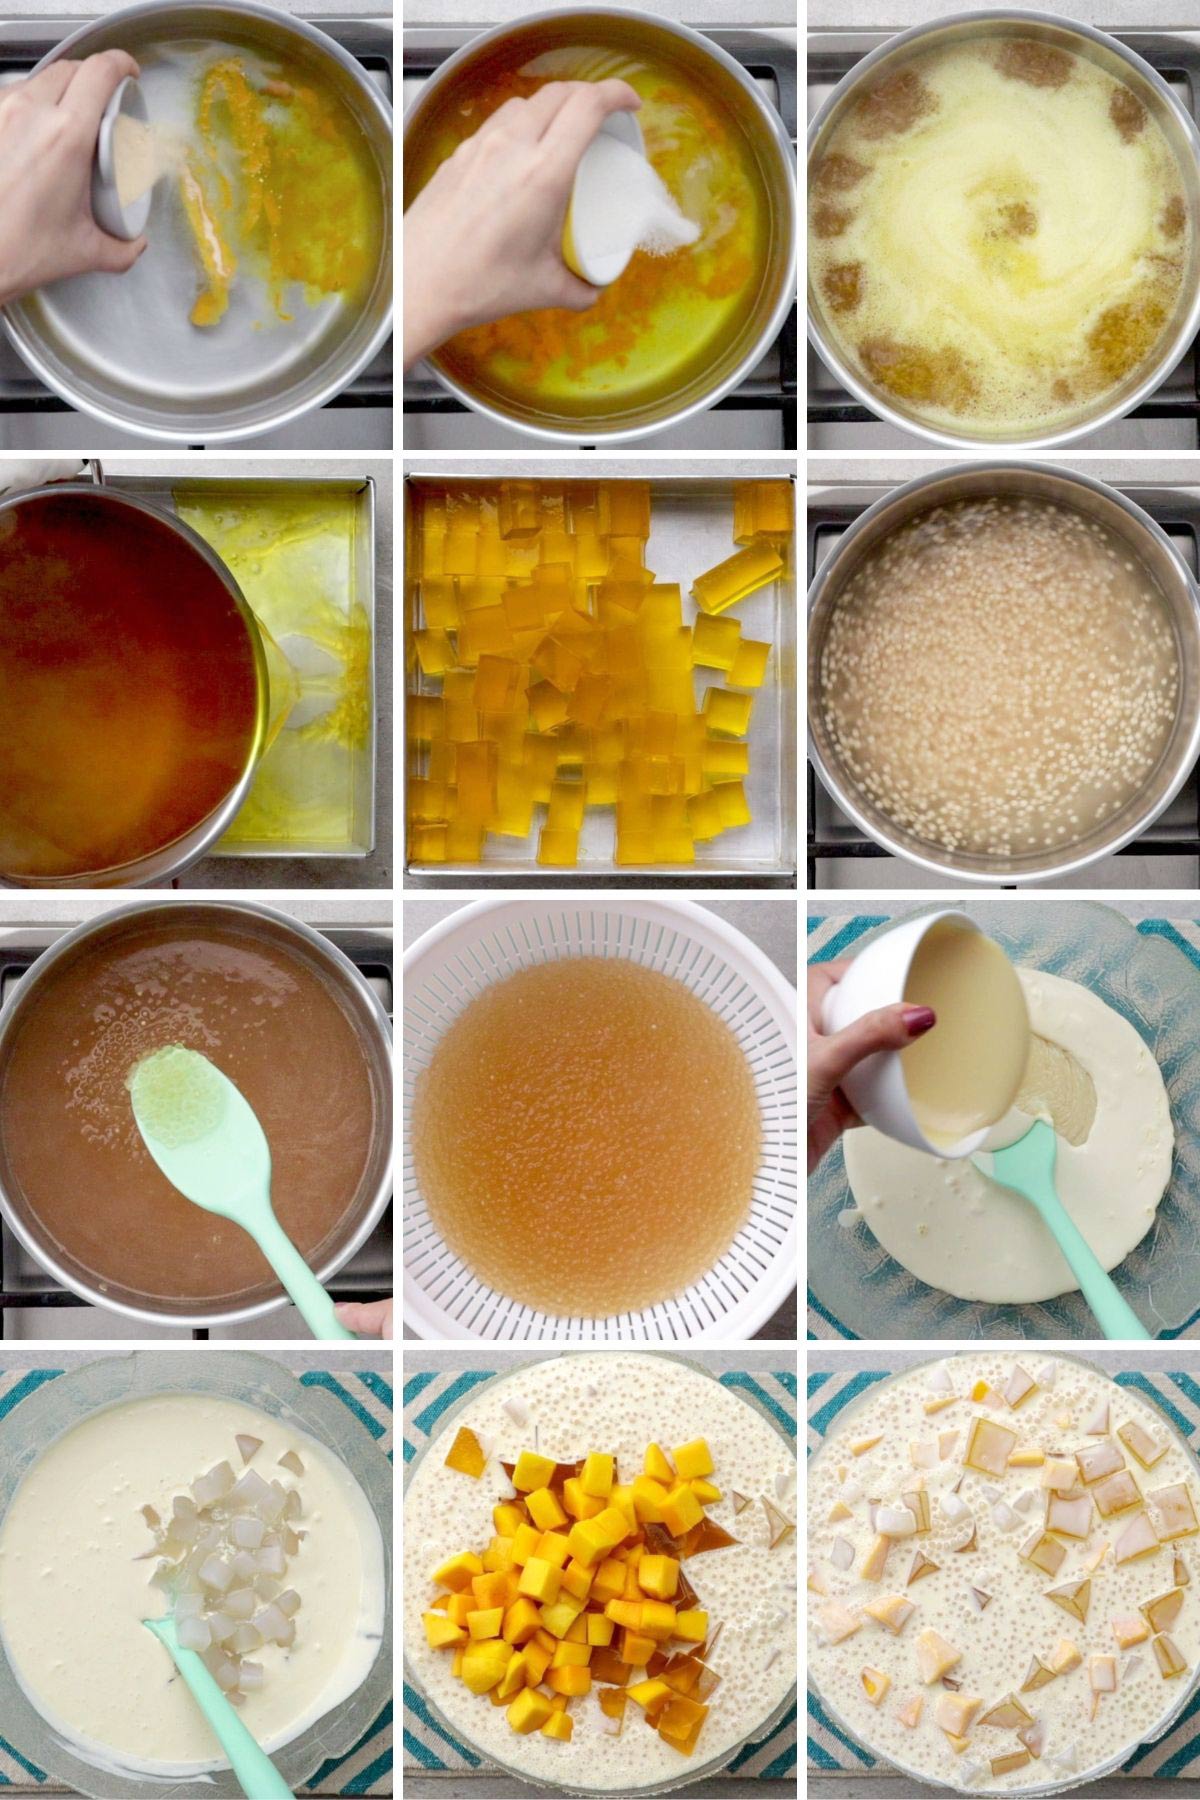 Steps on how to make Mango Jelly.